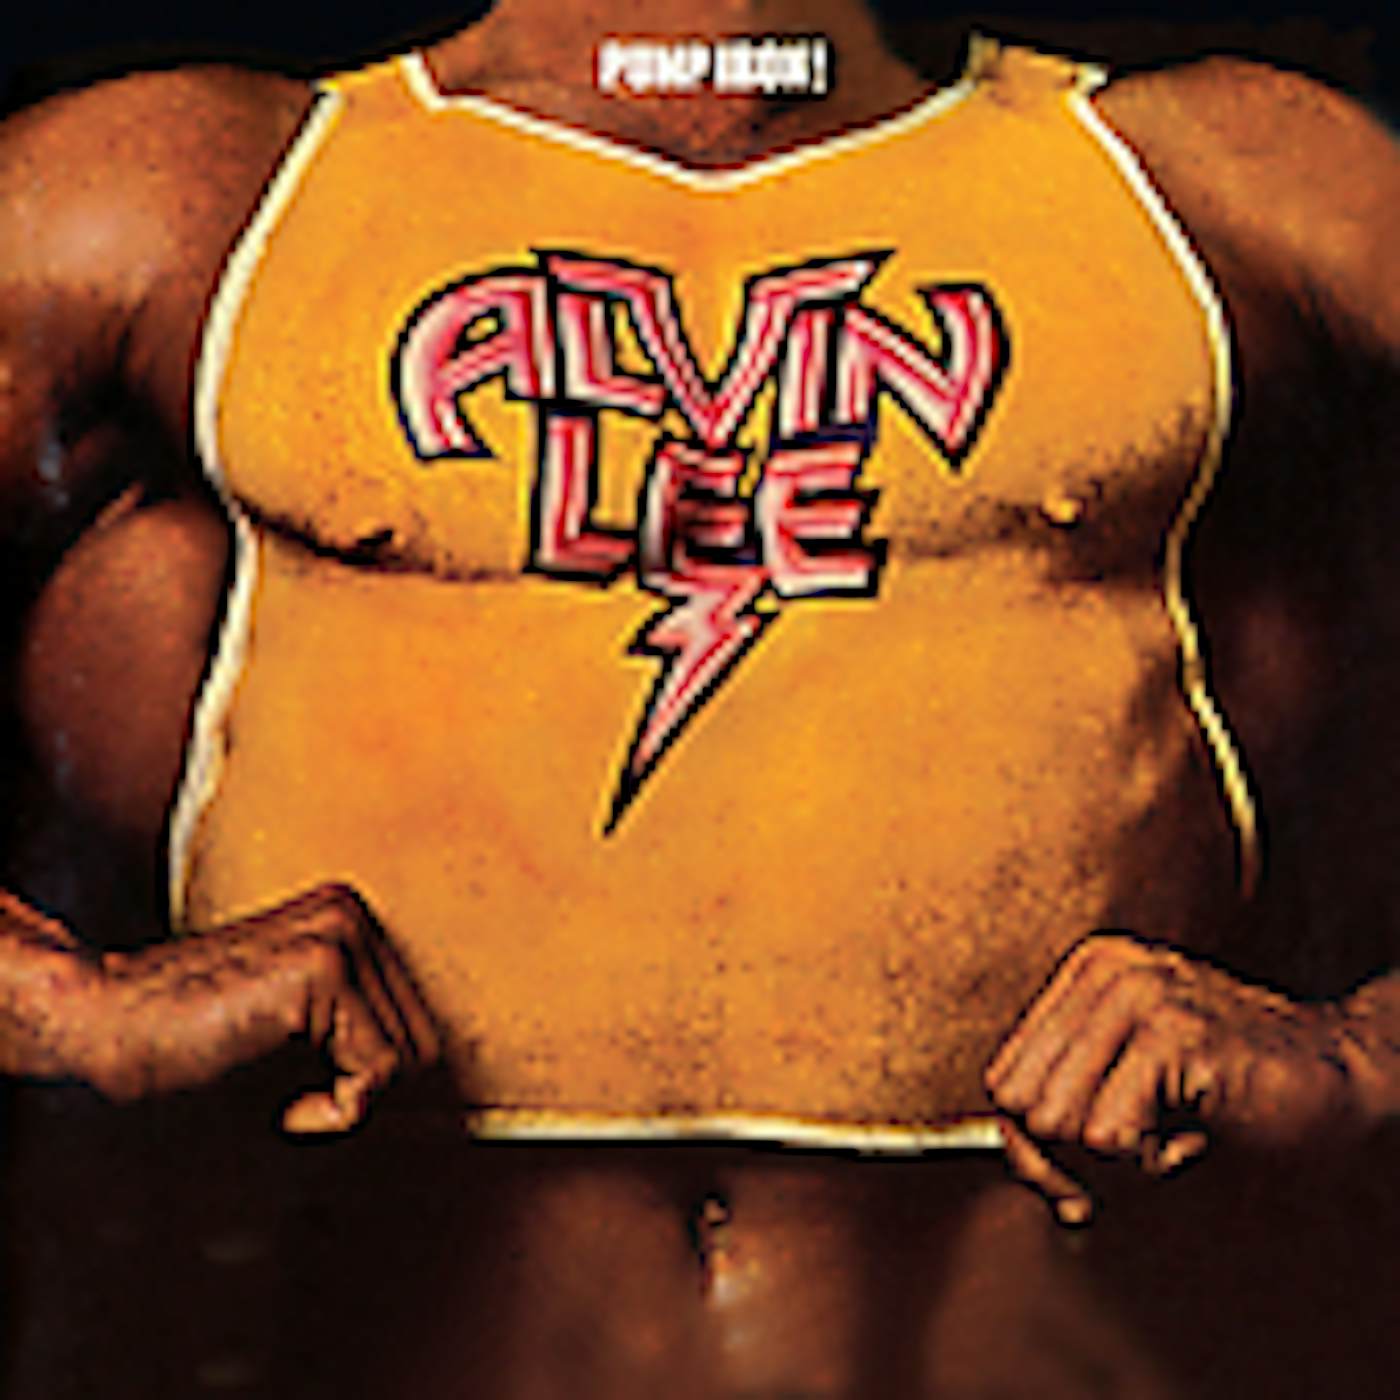 Alvin Lee PUMP IRON CD